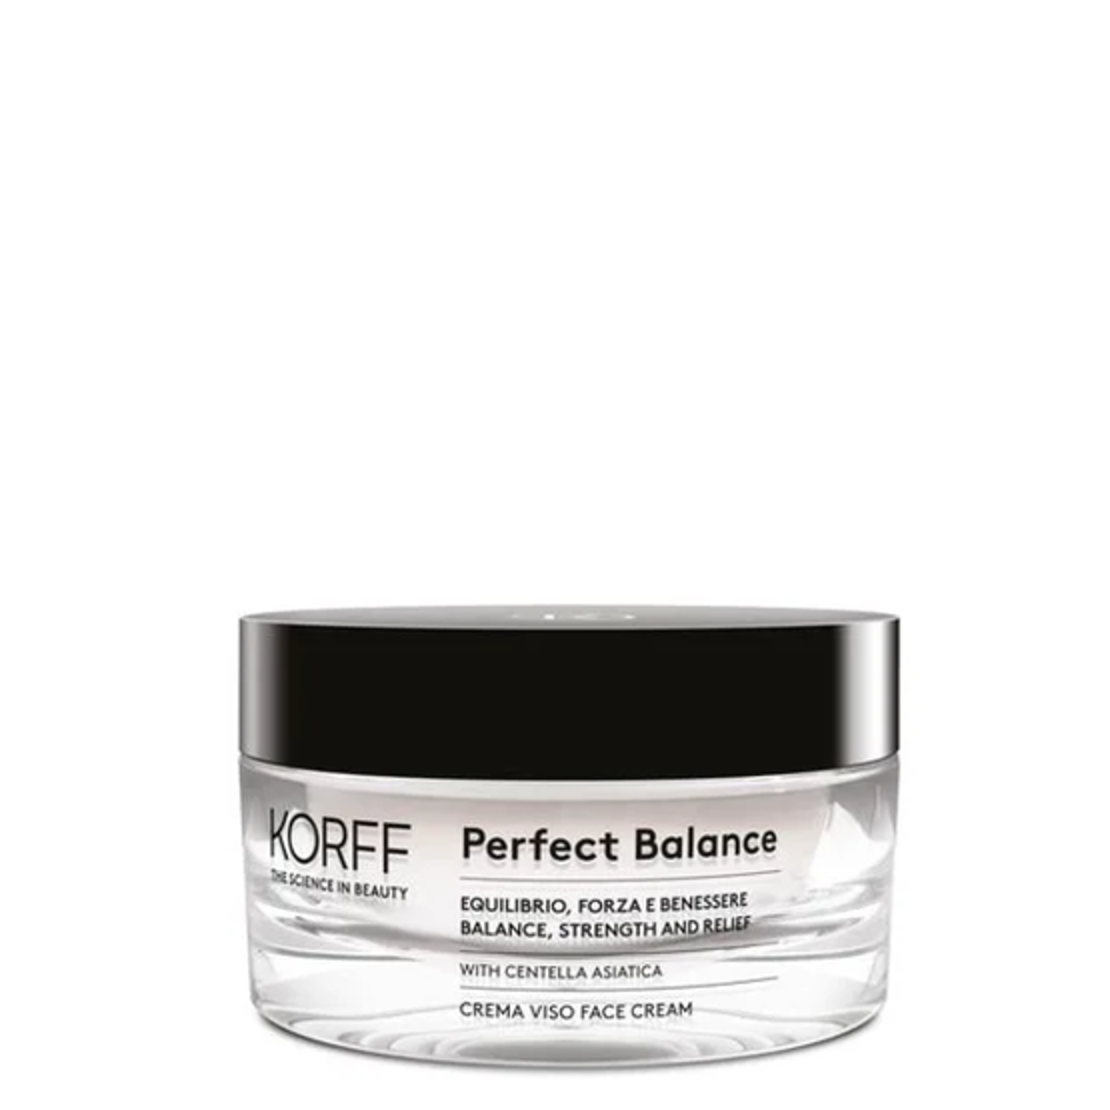 korff-perfect balance day face cream